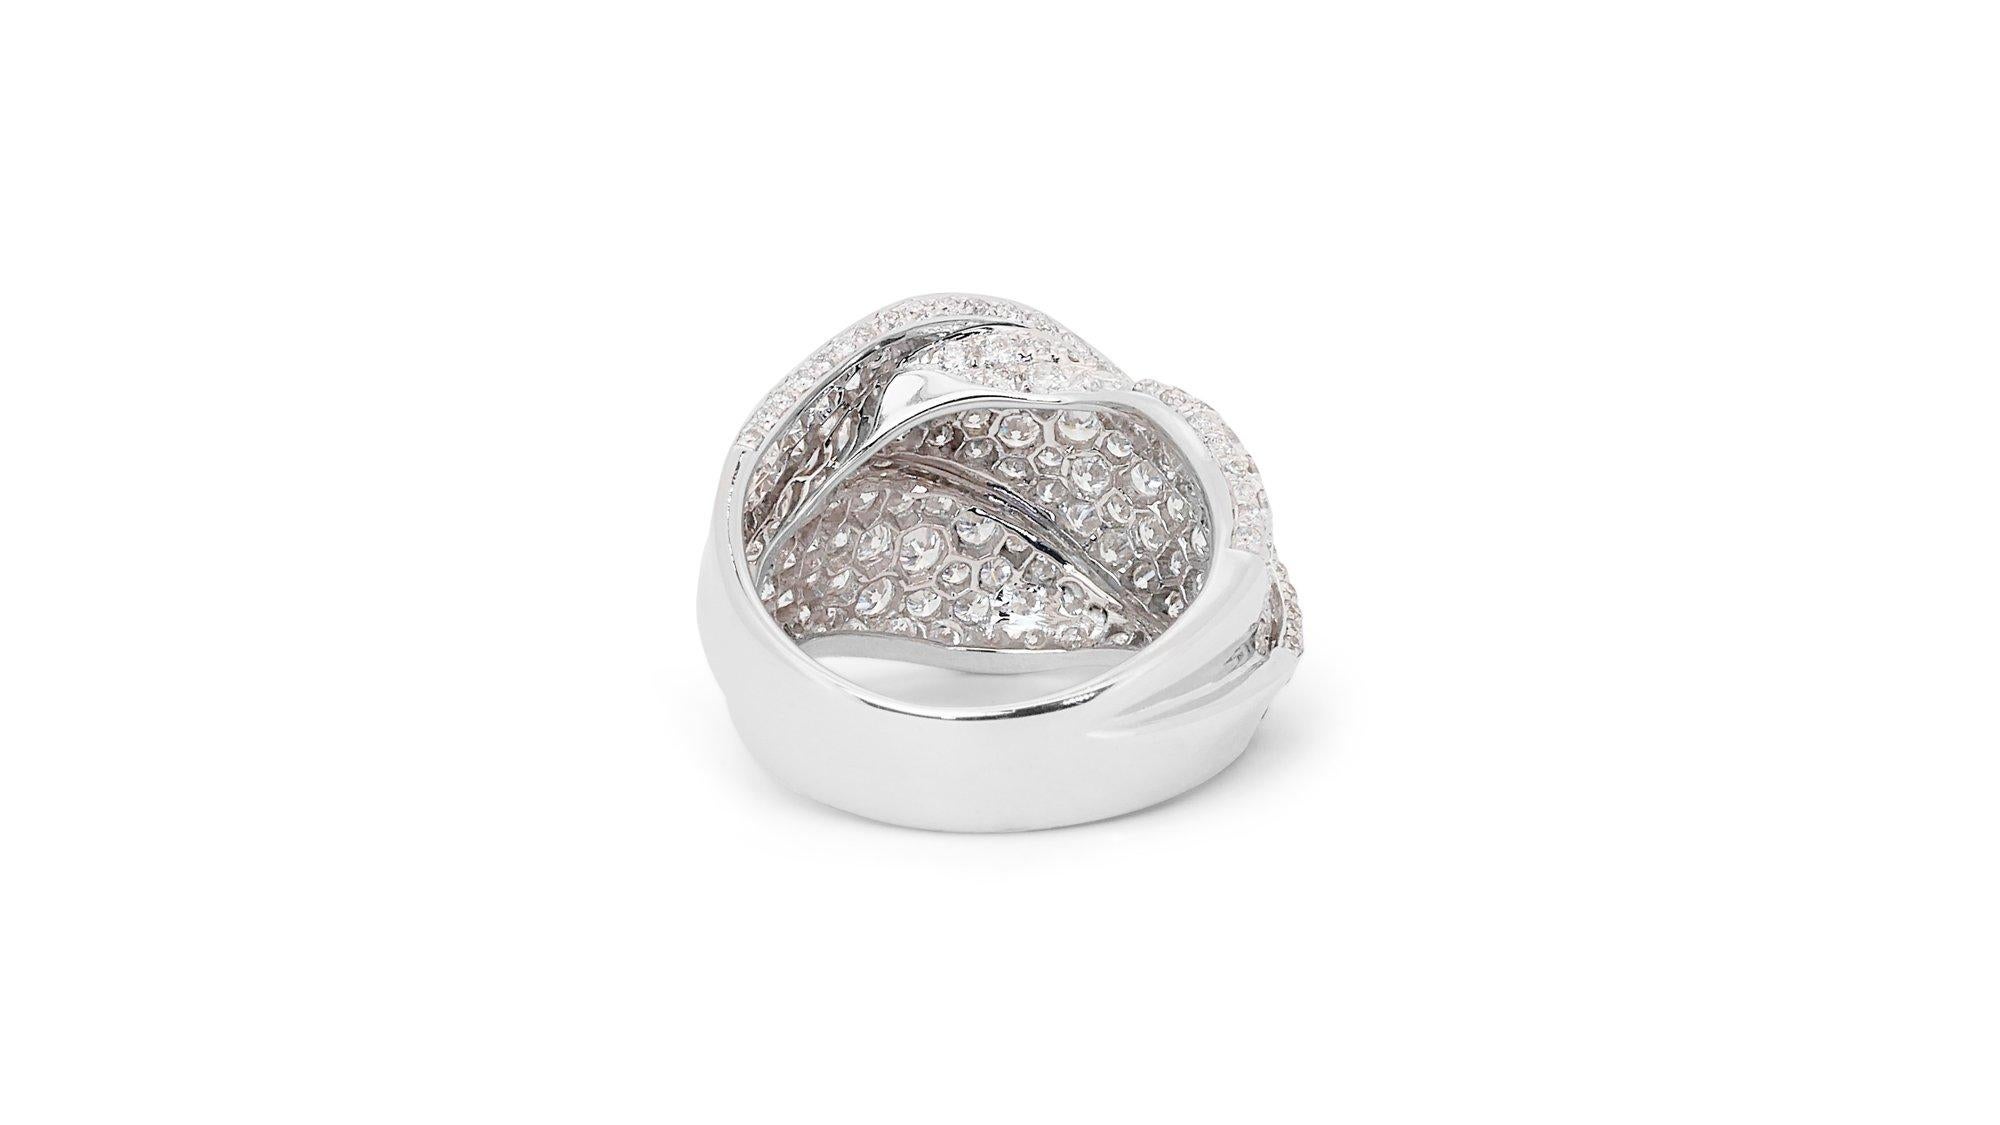 Elegant 18k White Gold Dome Ring with 4.50 Ct Natural Diamonds IGI Certificate 3